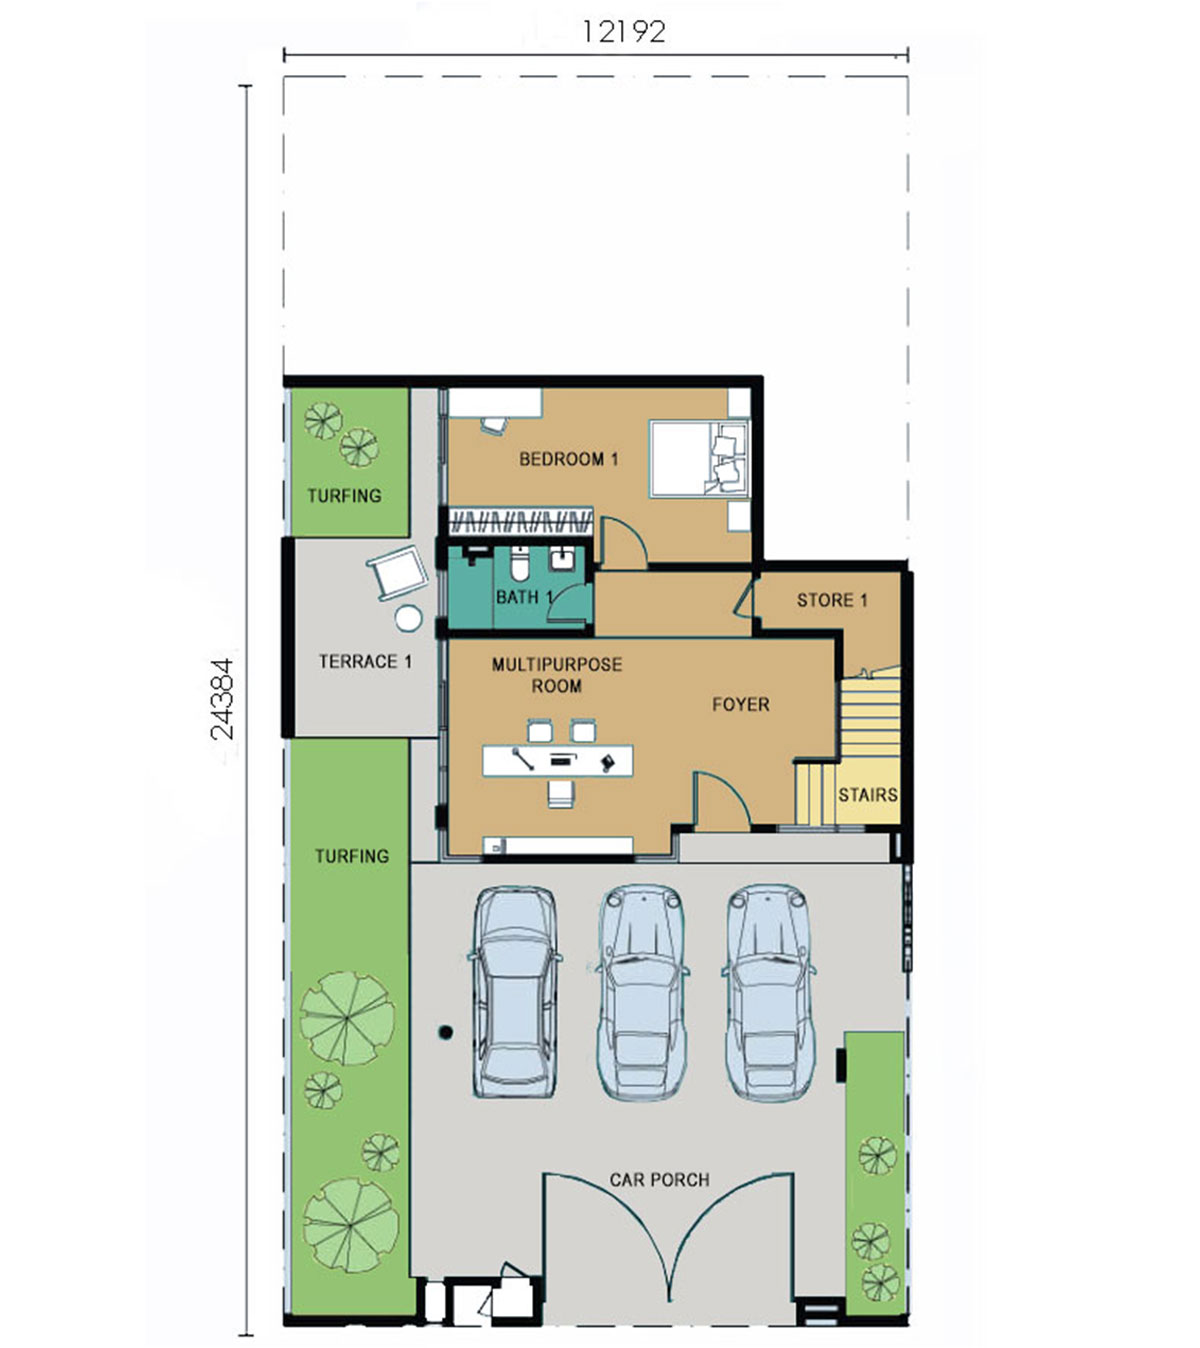 3-Storey Semi-Detached - Type B - Ground Floor,3-Storey Semi-Detached - Type B - Ground Floor